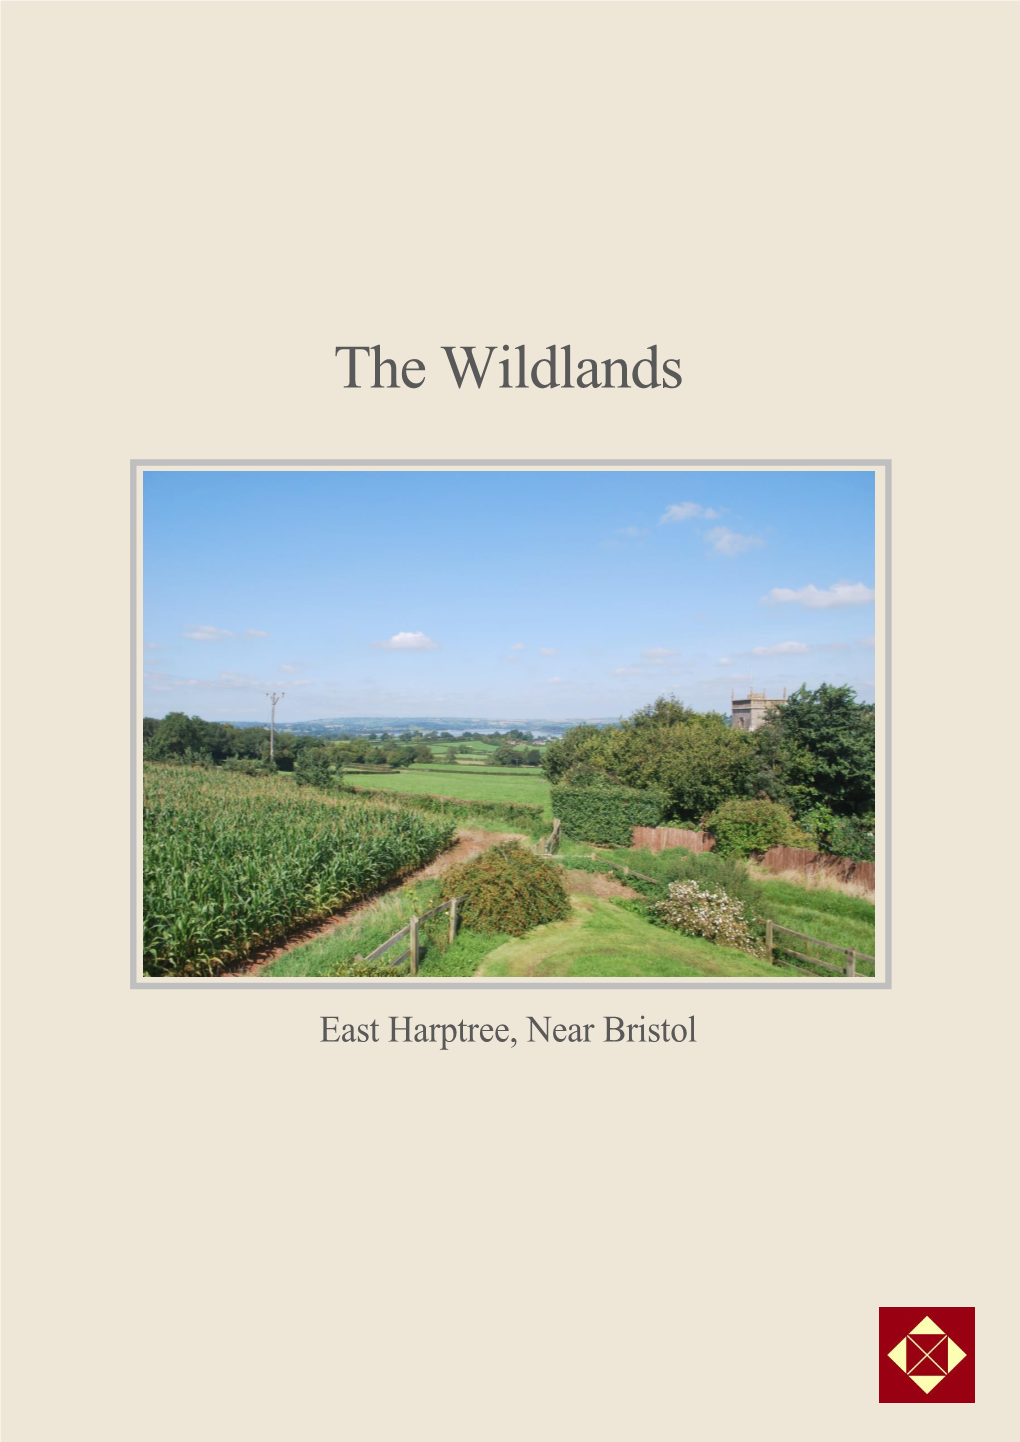 The Wildlands East Harptree, Near Bristol